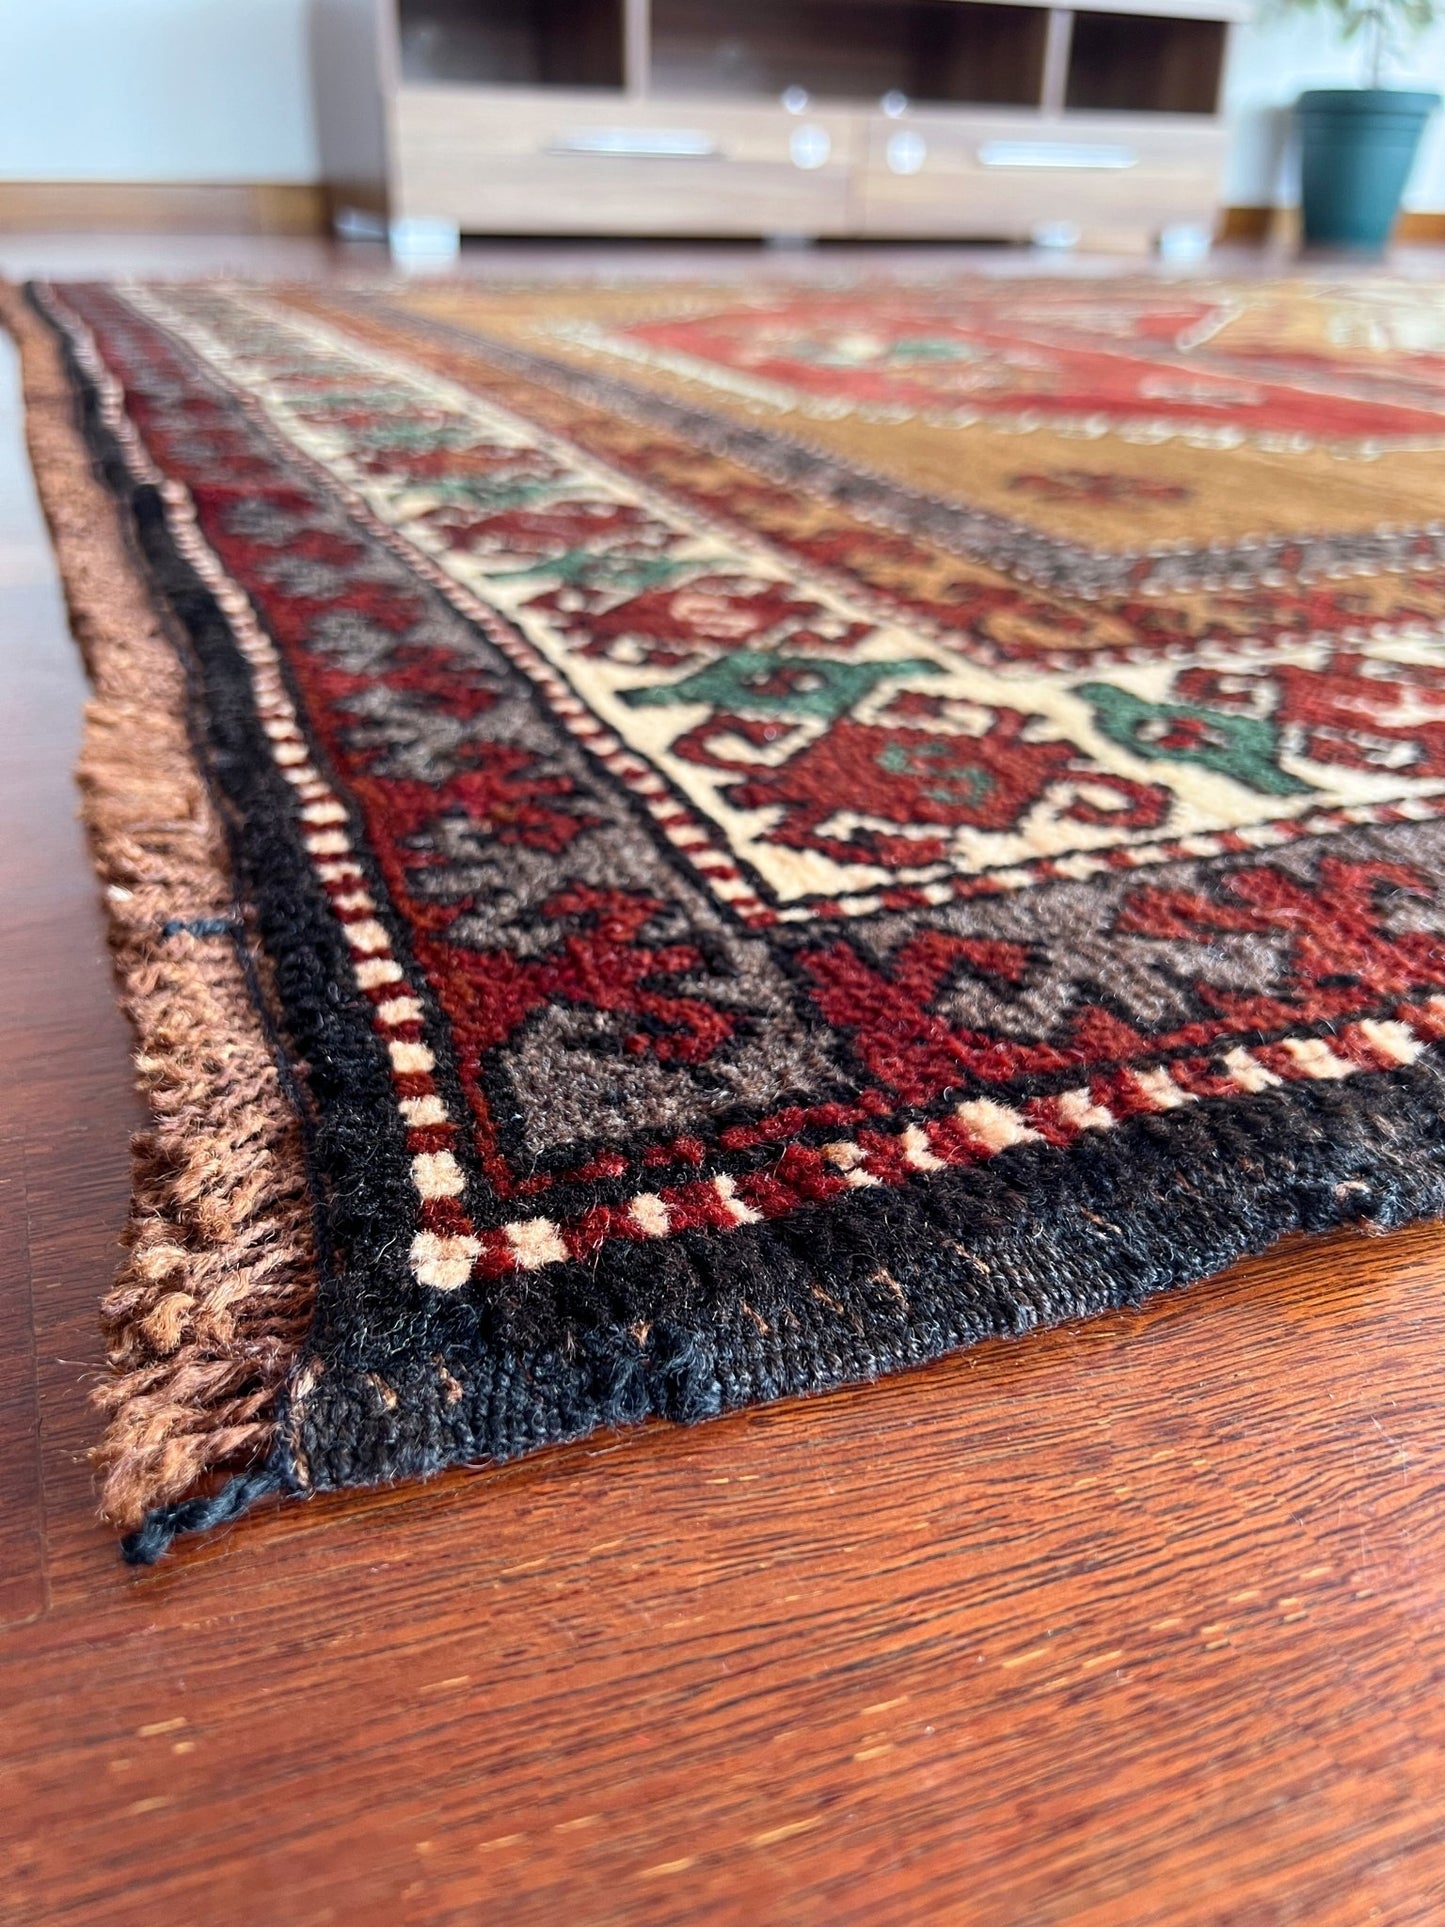 kars turkish rug san francisco bay area oriental rug shop palo alto rug shopping berkeley buy rugs online free shipping